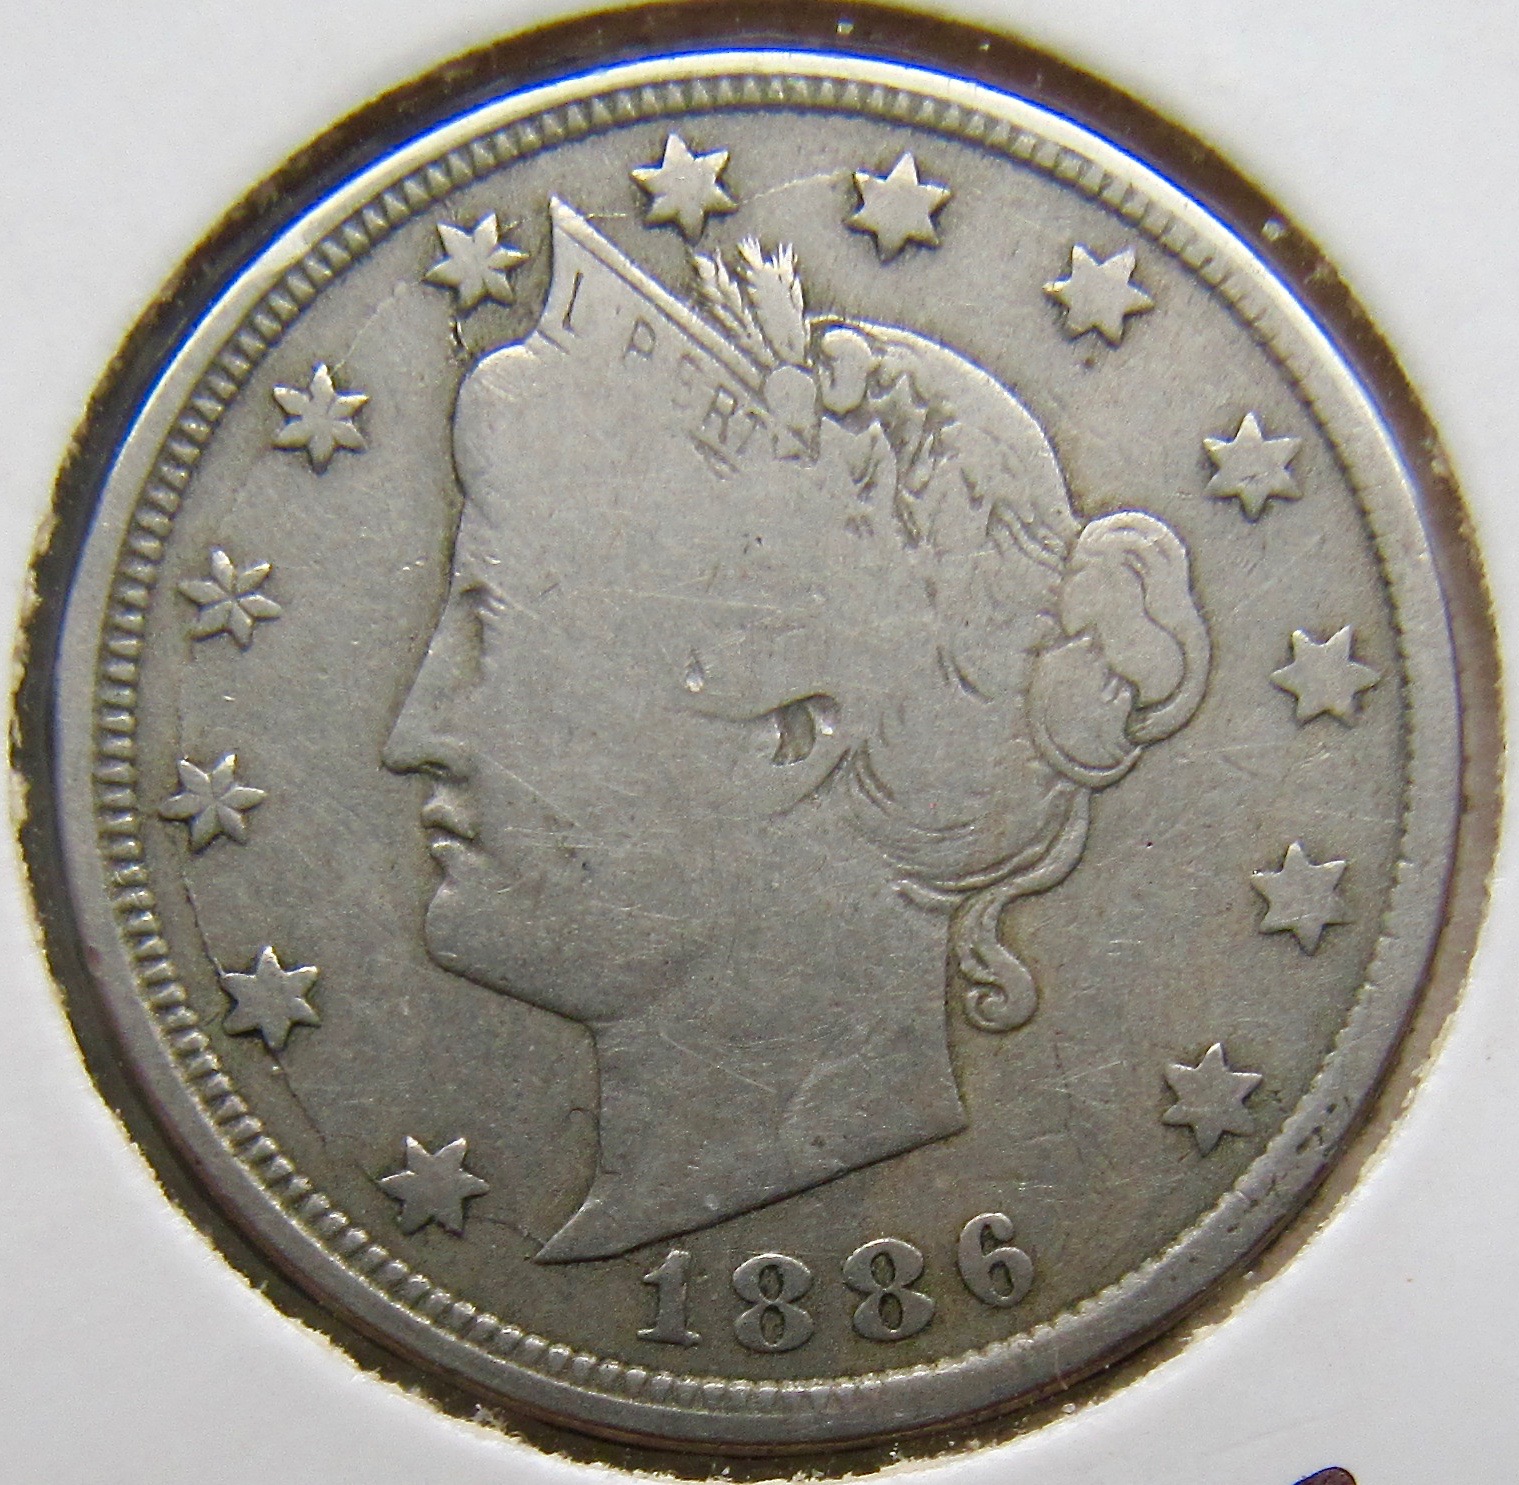 1886 5 cent nickel obv1 N  - 1.jpg